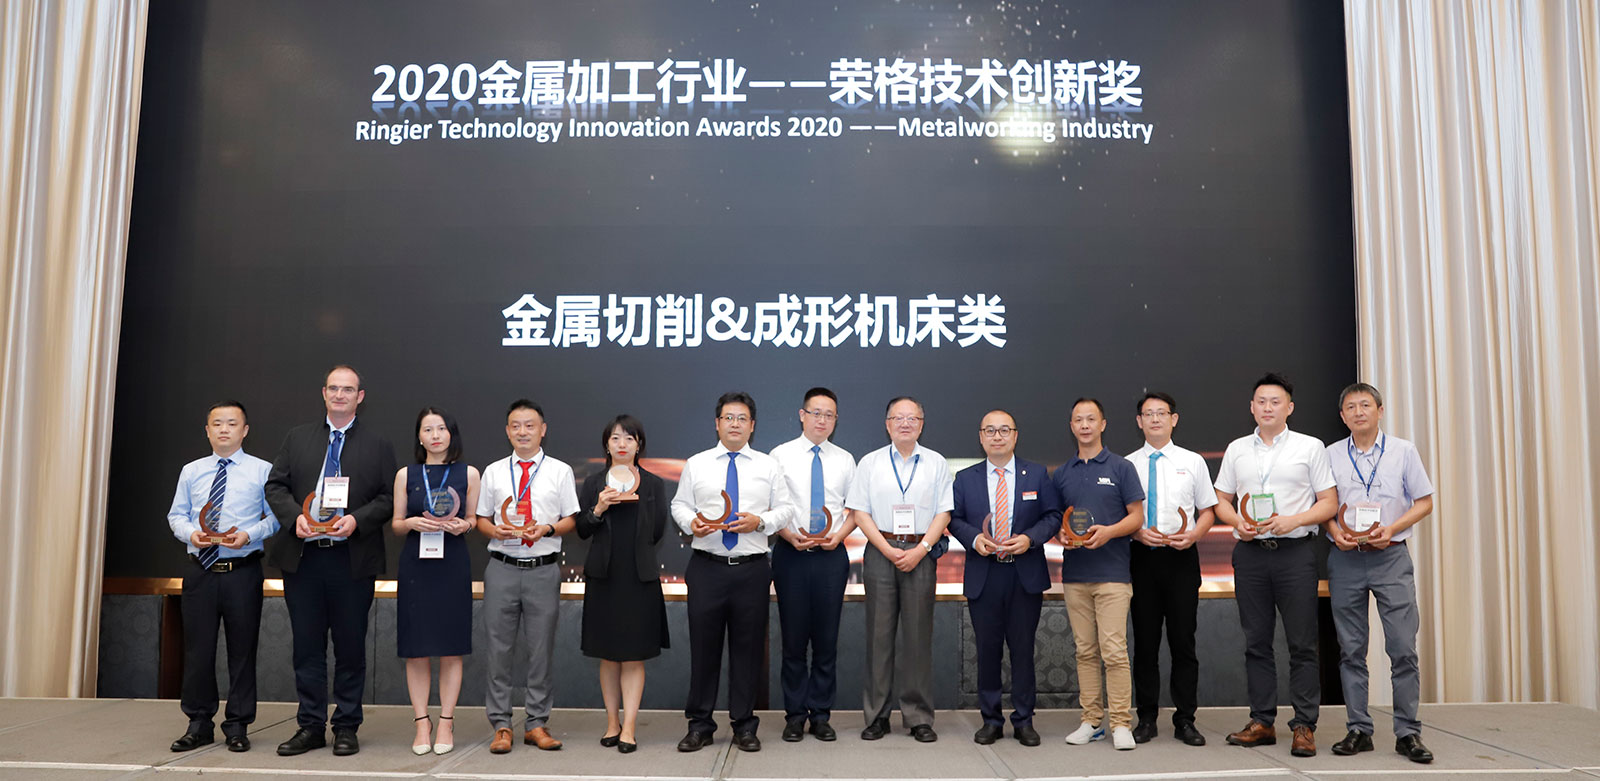 Soraluce Receives the Ringier Technology Innovation Award 2020